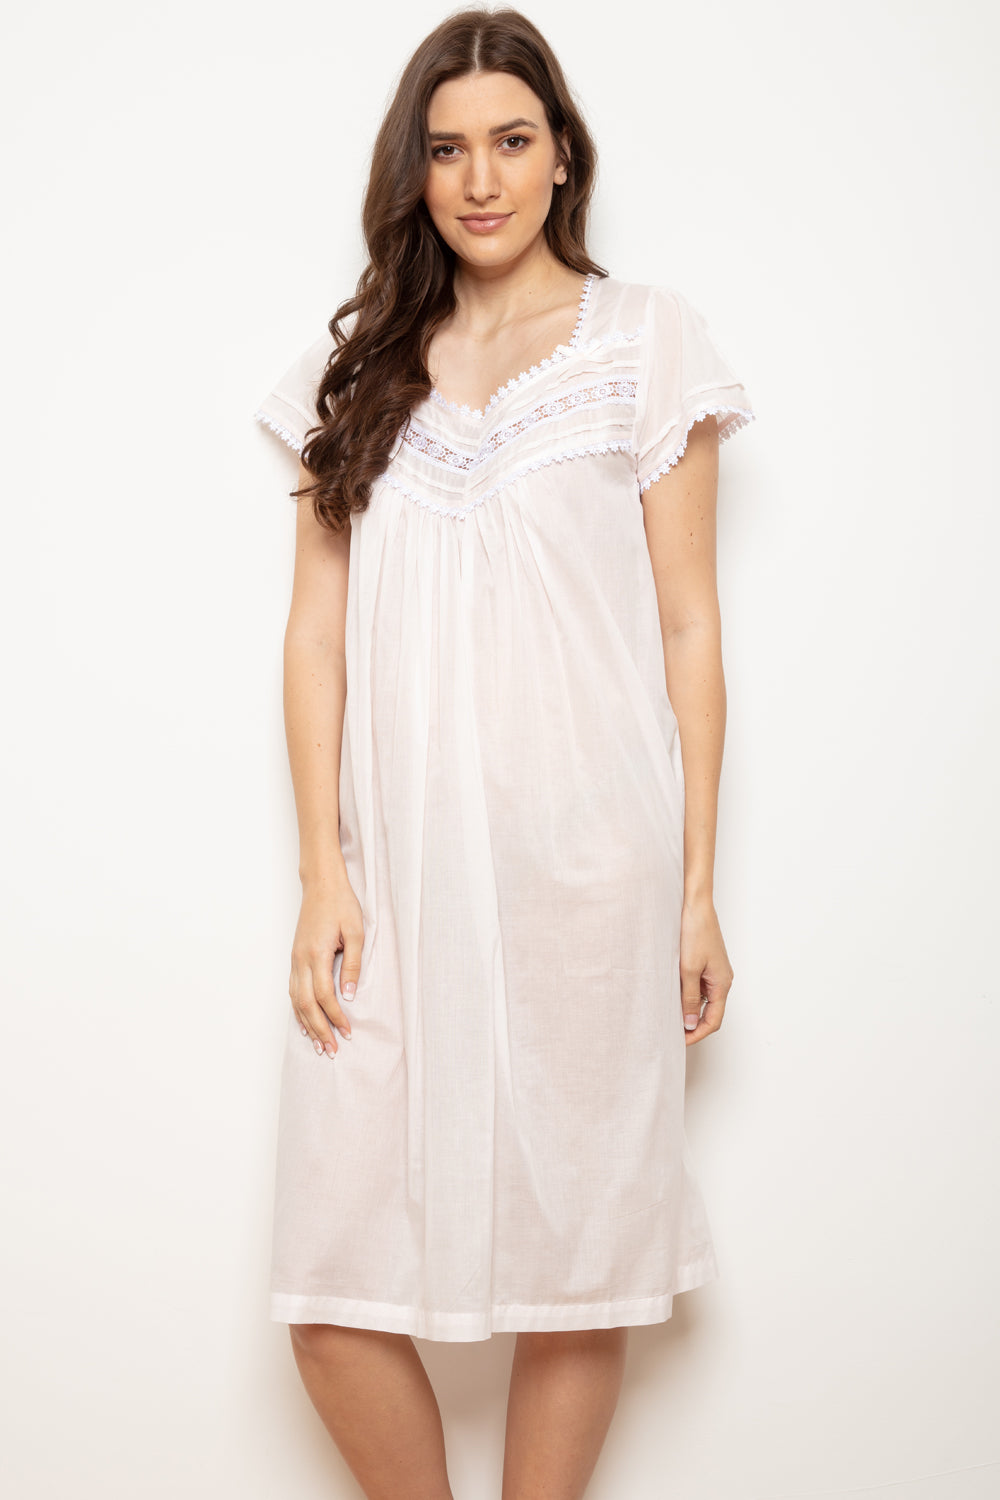 Cottonreal 'Ravena' Cotton Voile Short Sleeve Nightdress - Pale Pink